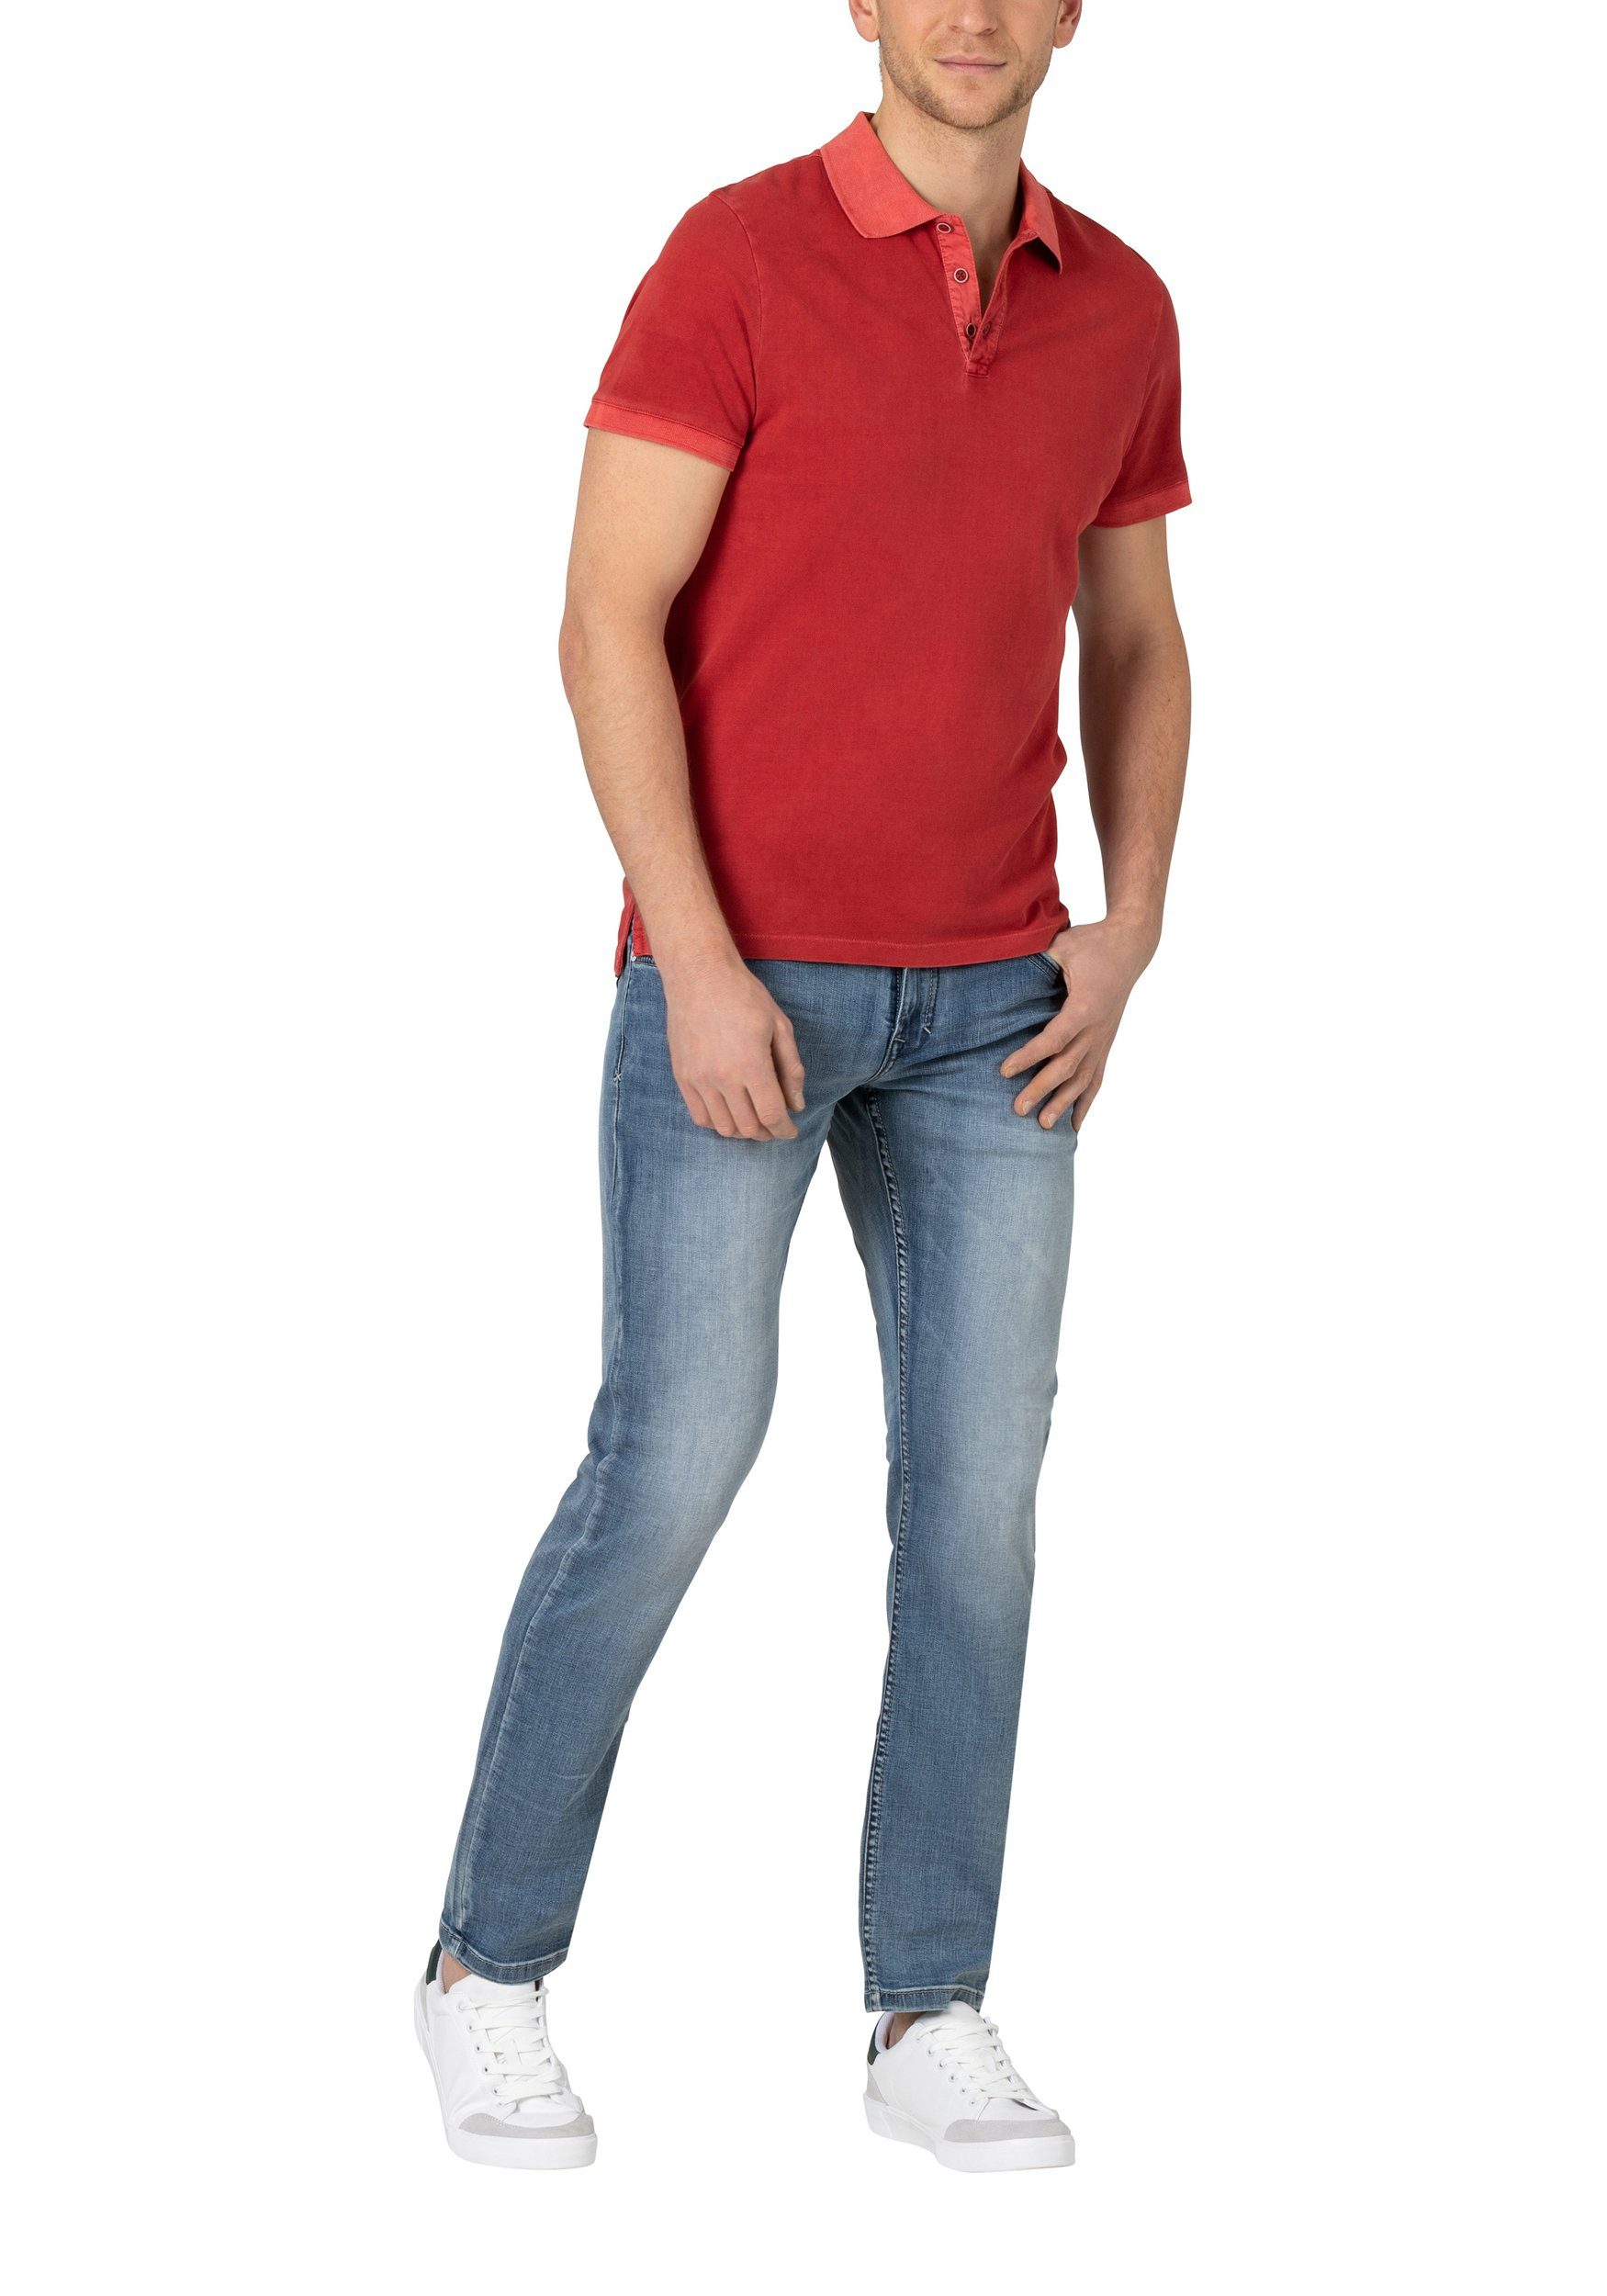 5-Pocket Jeans Regular Hose Regular-fit-Jeans 6596 Reißverschluss in Denim Blau-2 Pants TIMEZONE